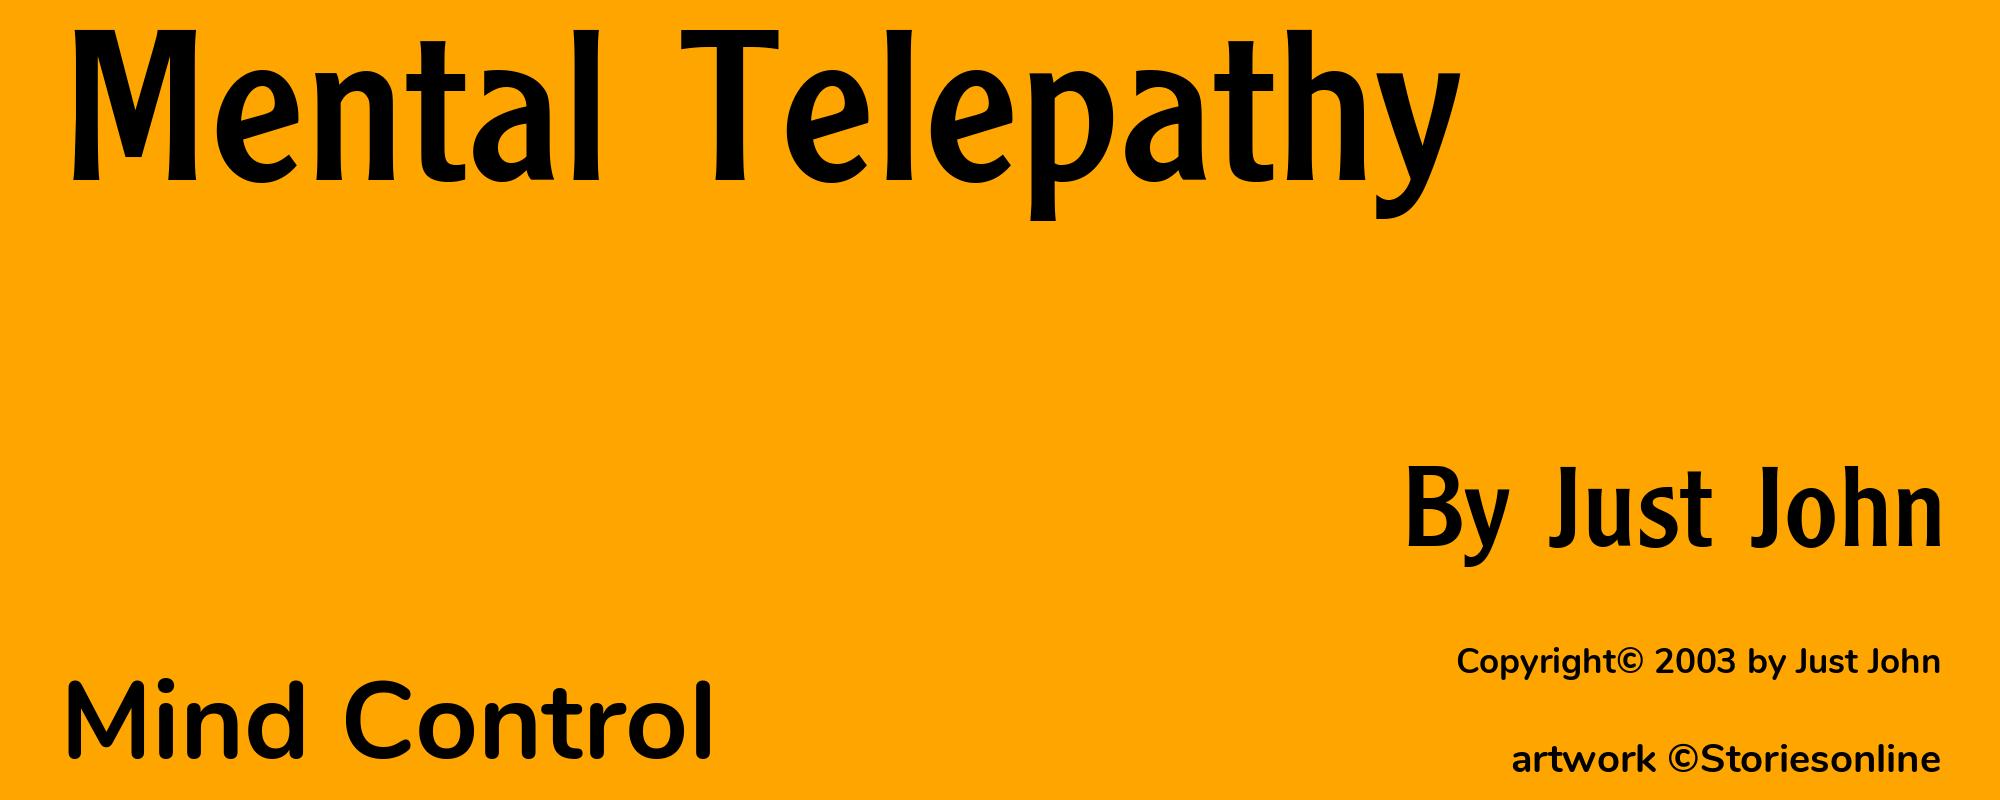 Mental Telepathy - Cover